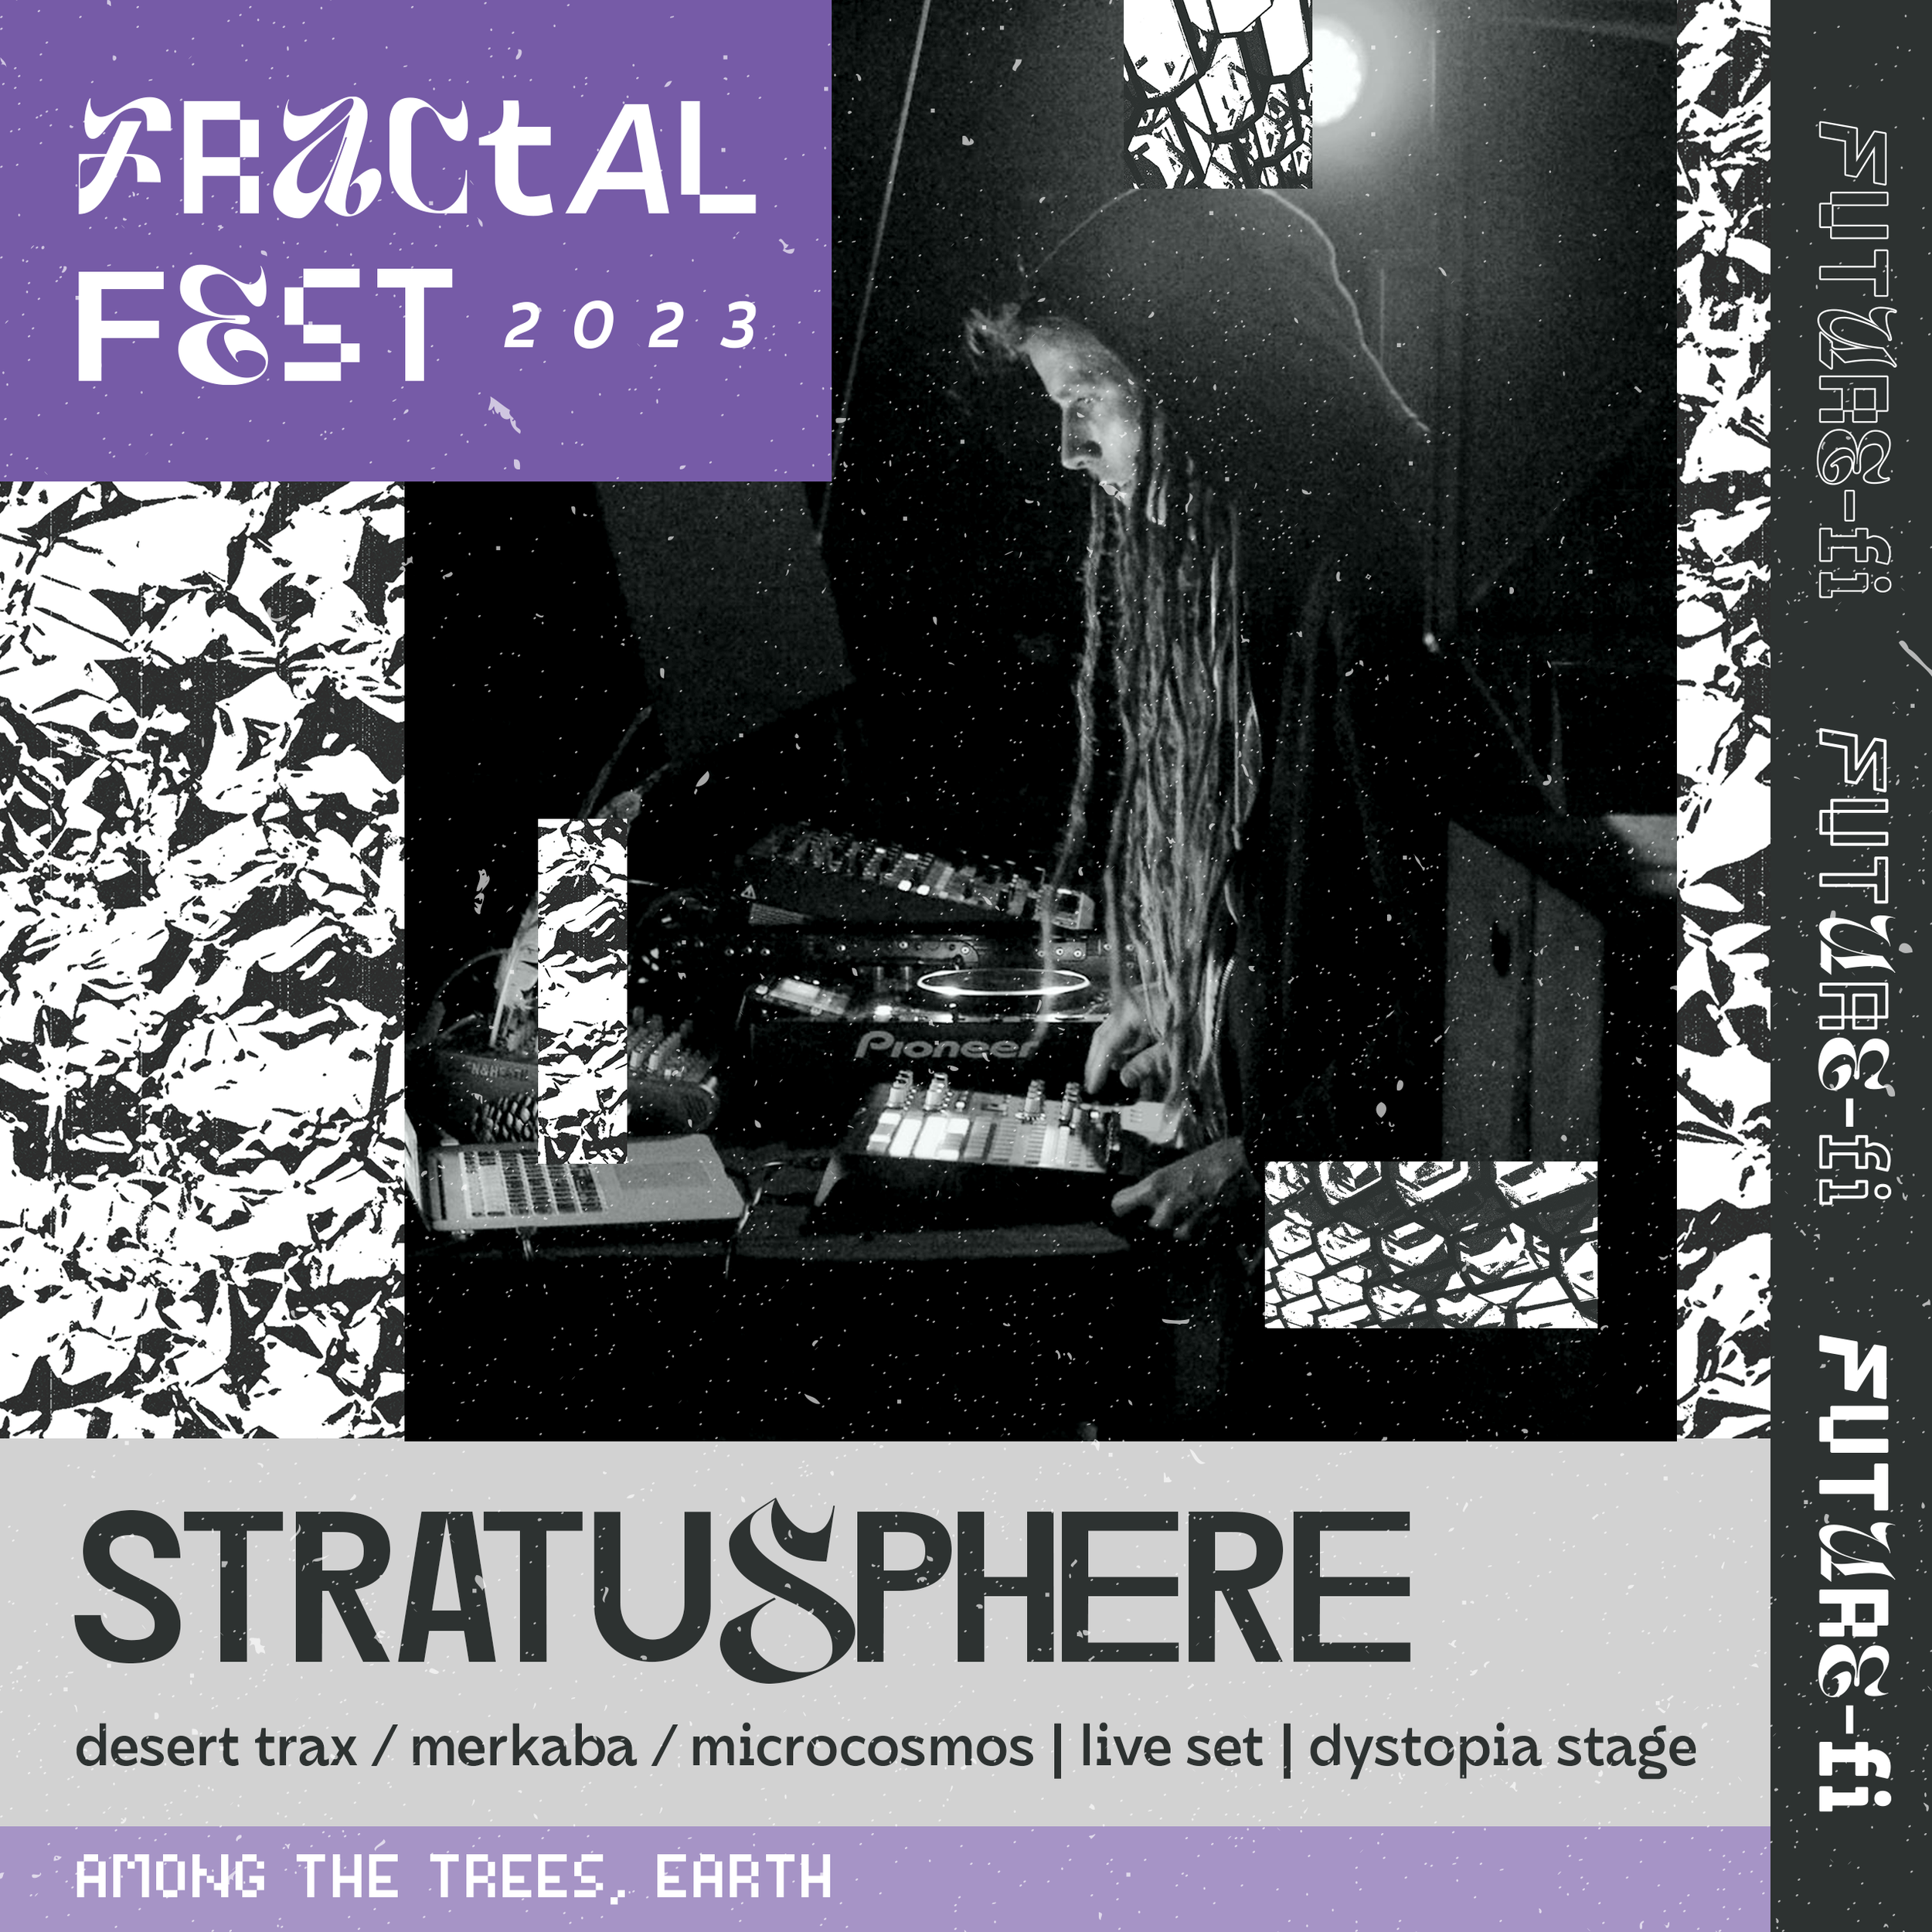 FF23_ArtistSpotlight-Stratusphere.png